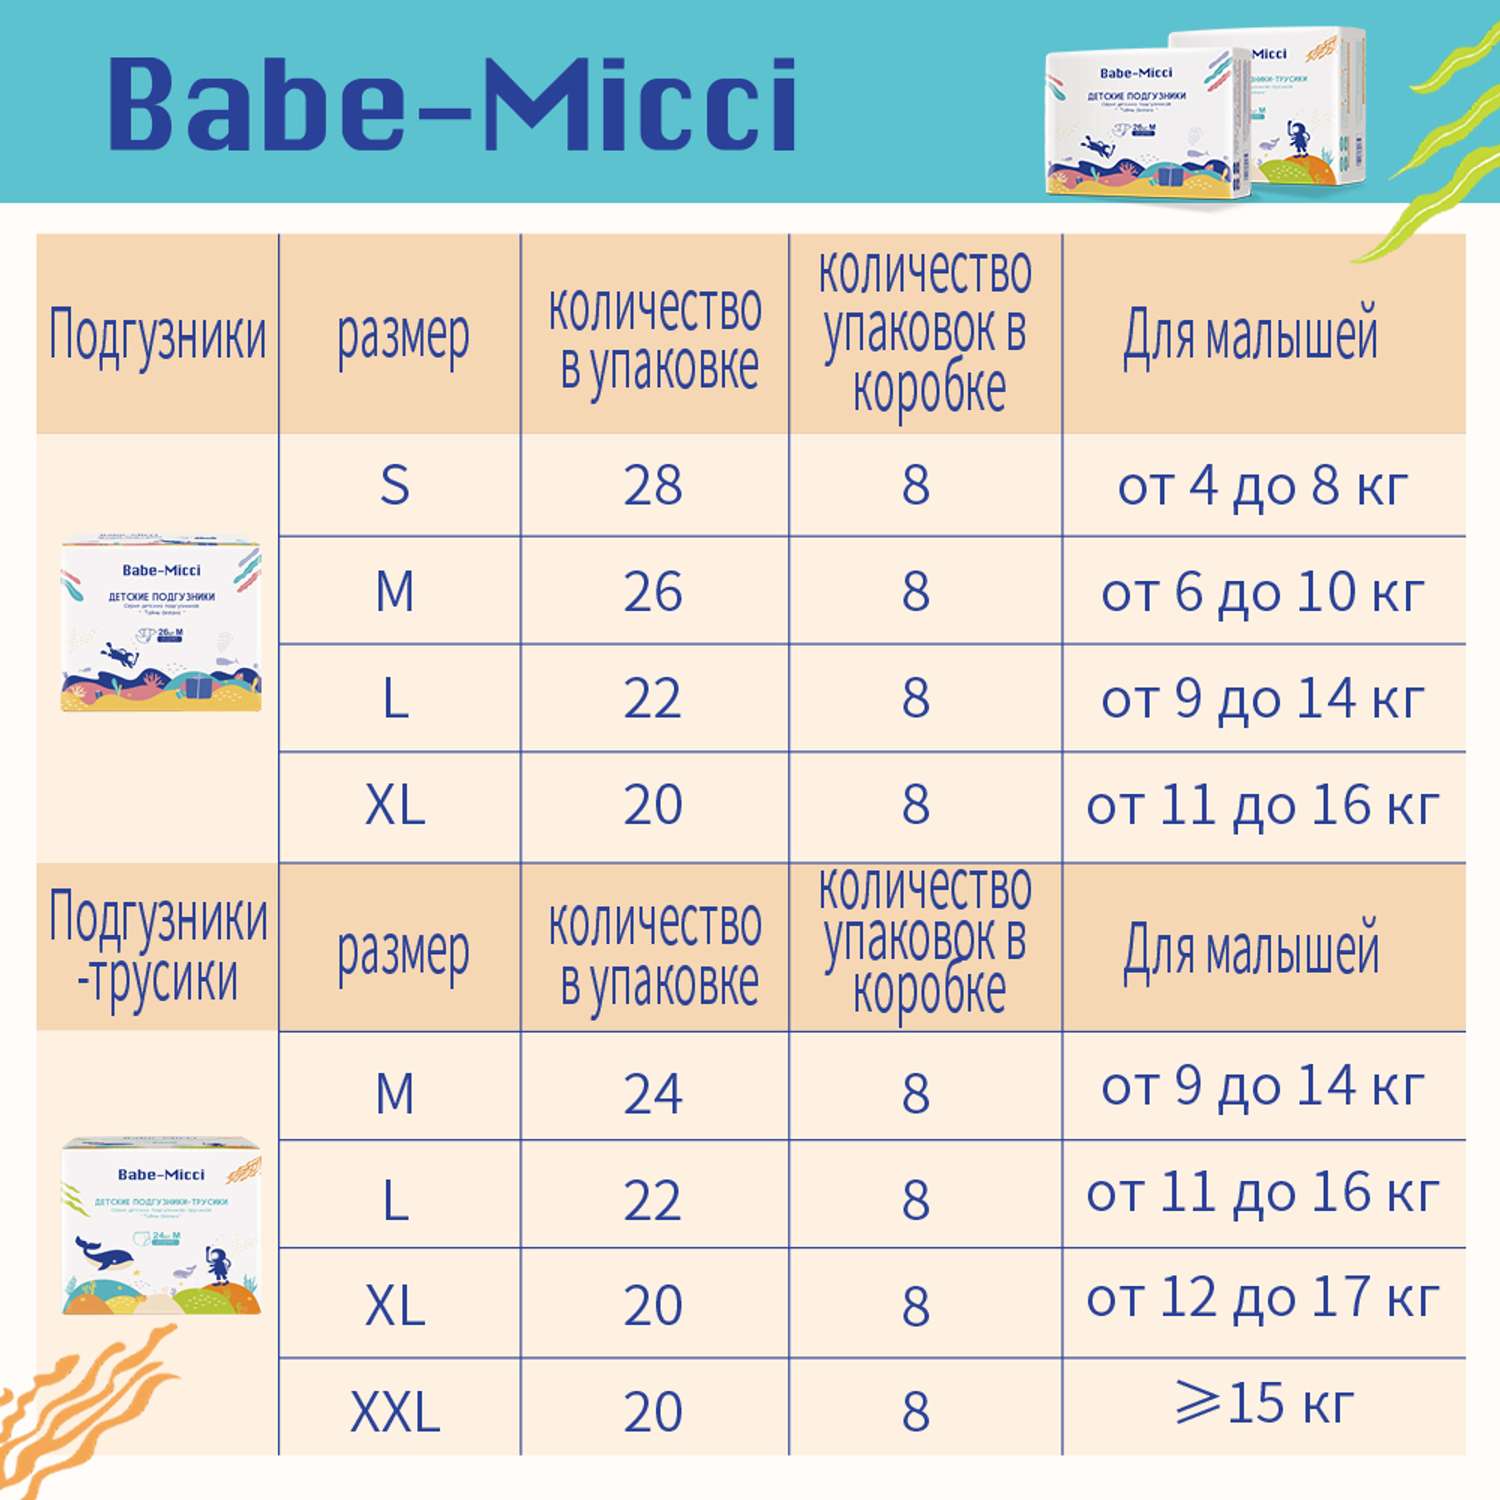 Подгузники детские Babe-Micci 9-14 кг размер L 22 шт - фото 3